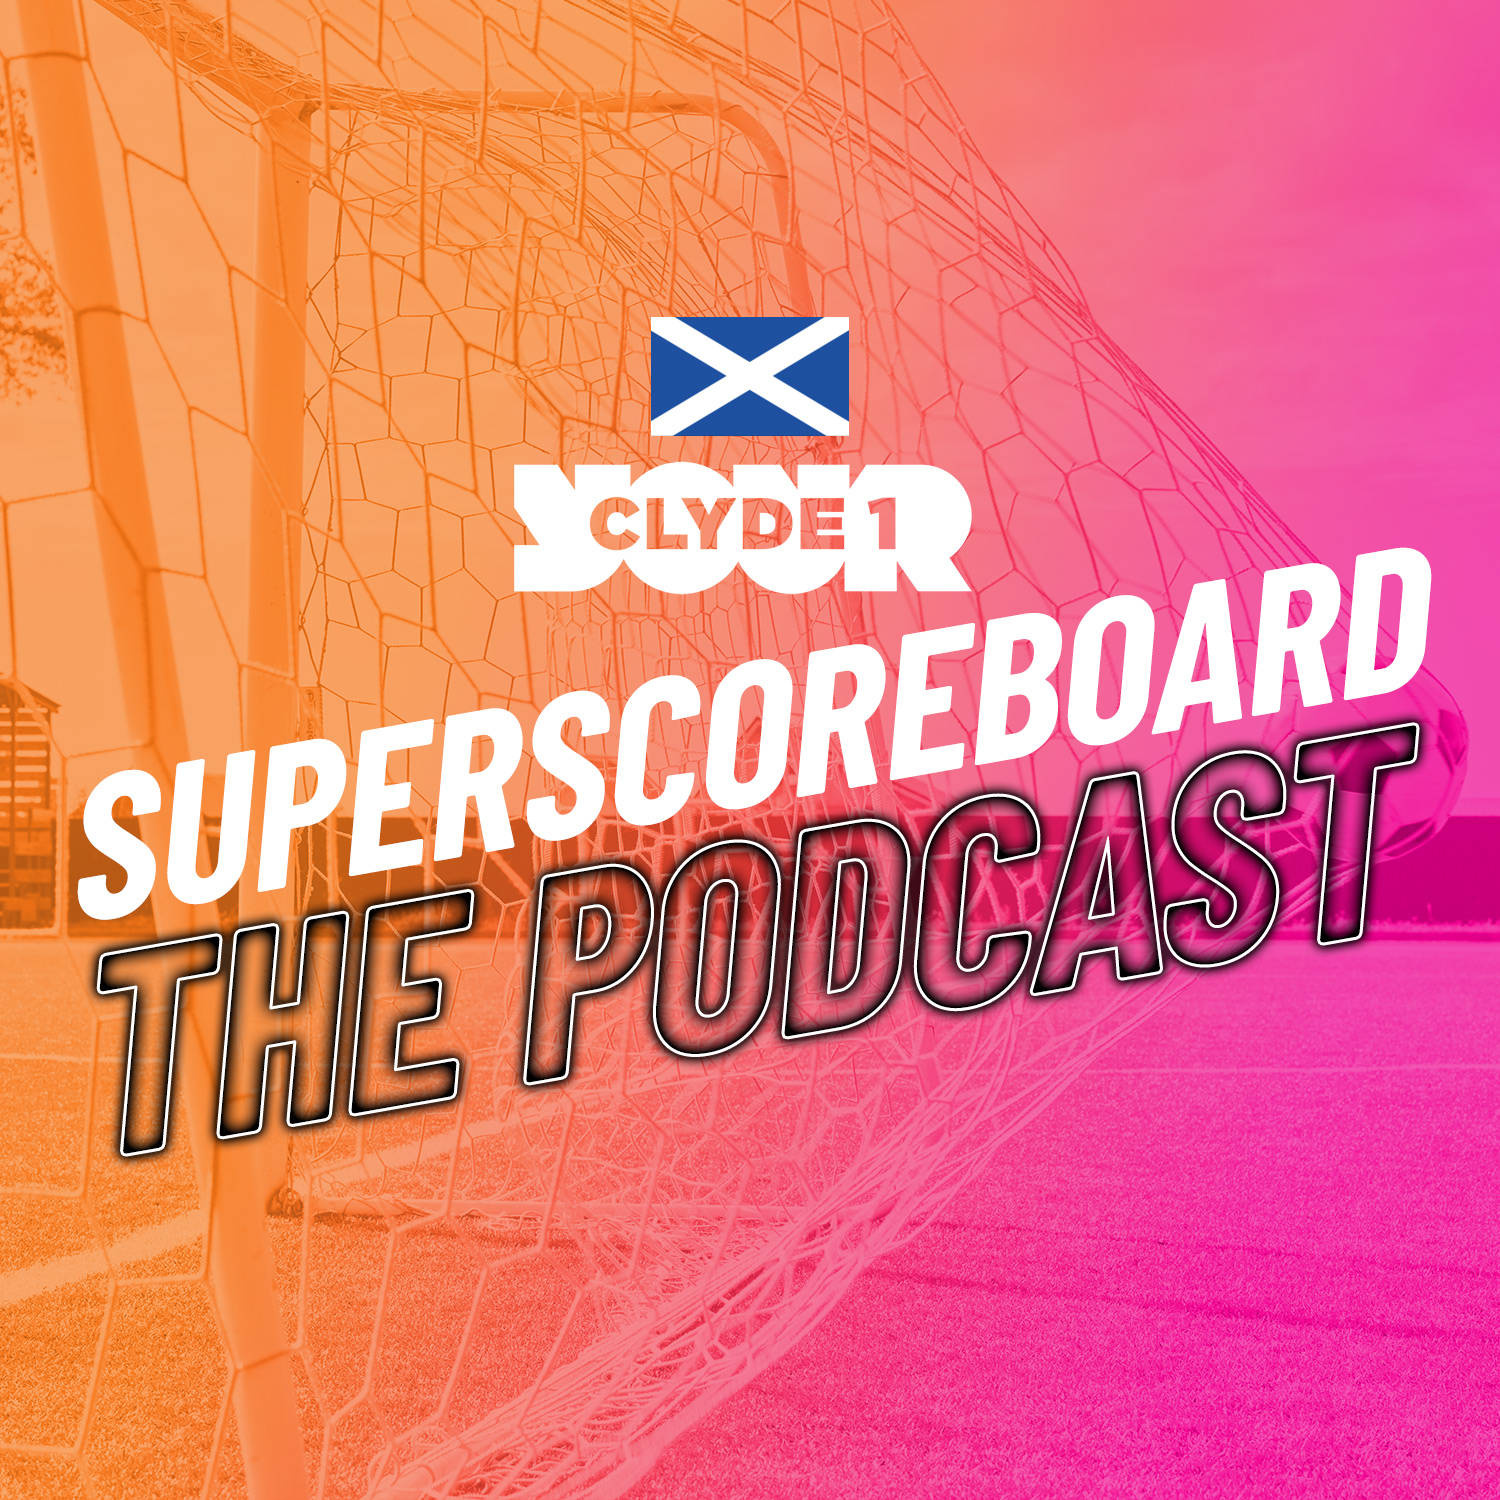 Saturday 2nd December Clyde 1 Superscoreboard – Part 2